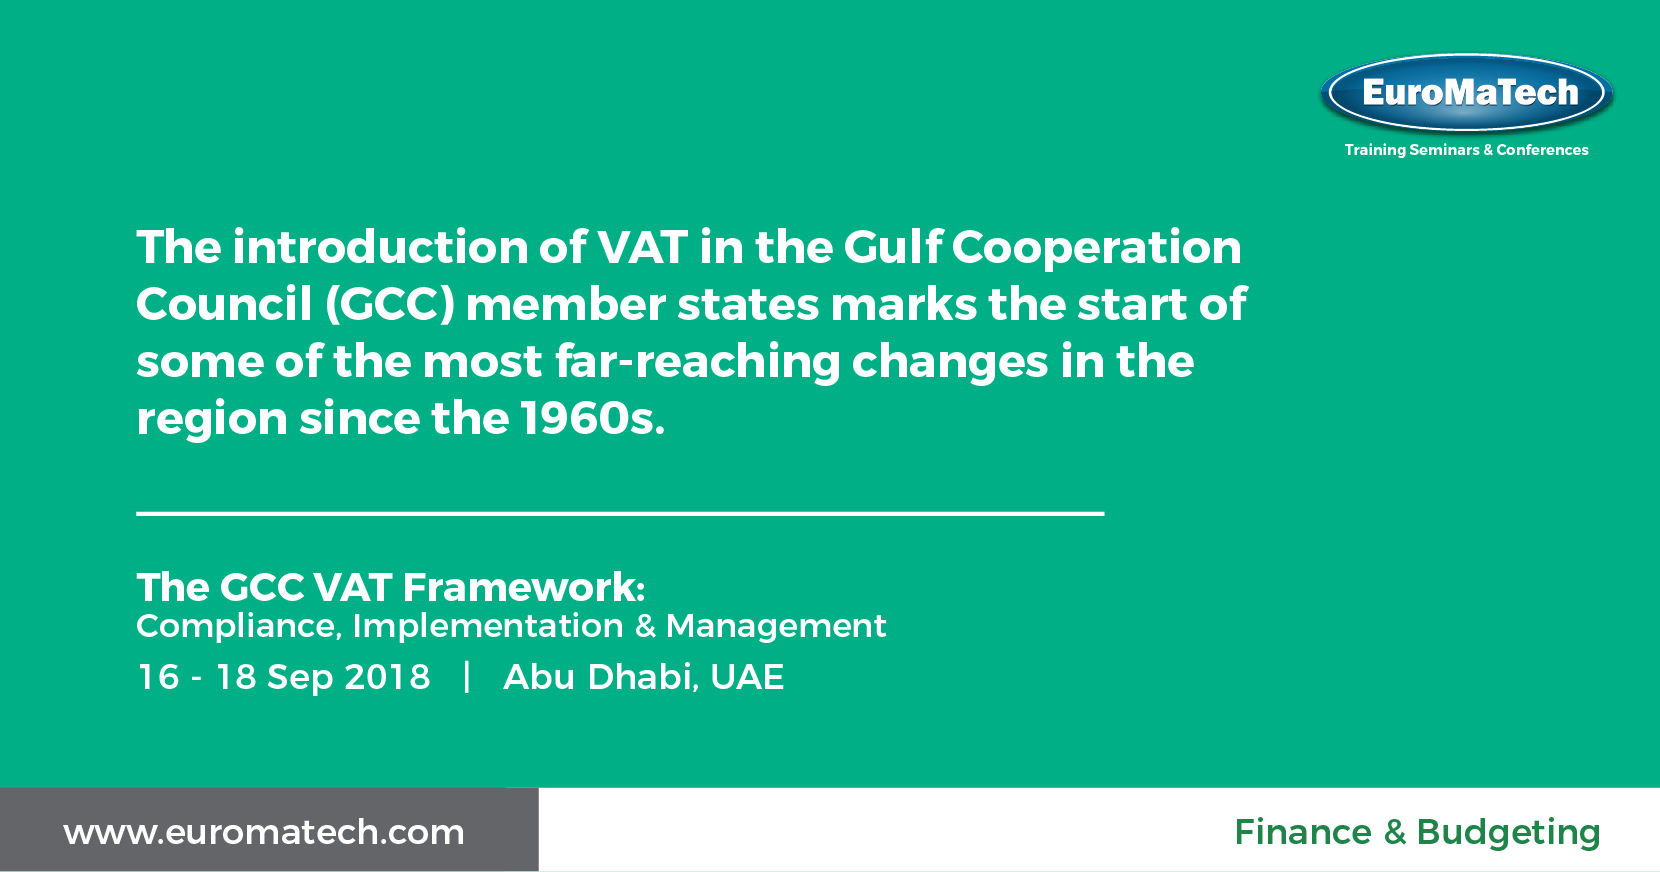 The GCC VAT Framework Training Course